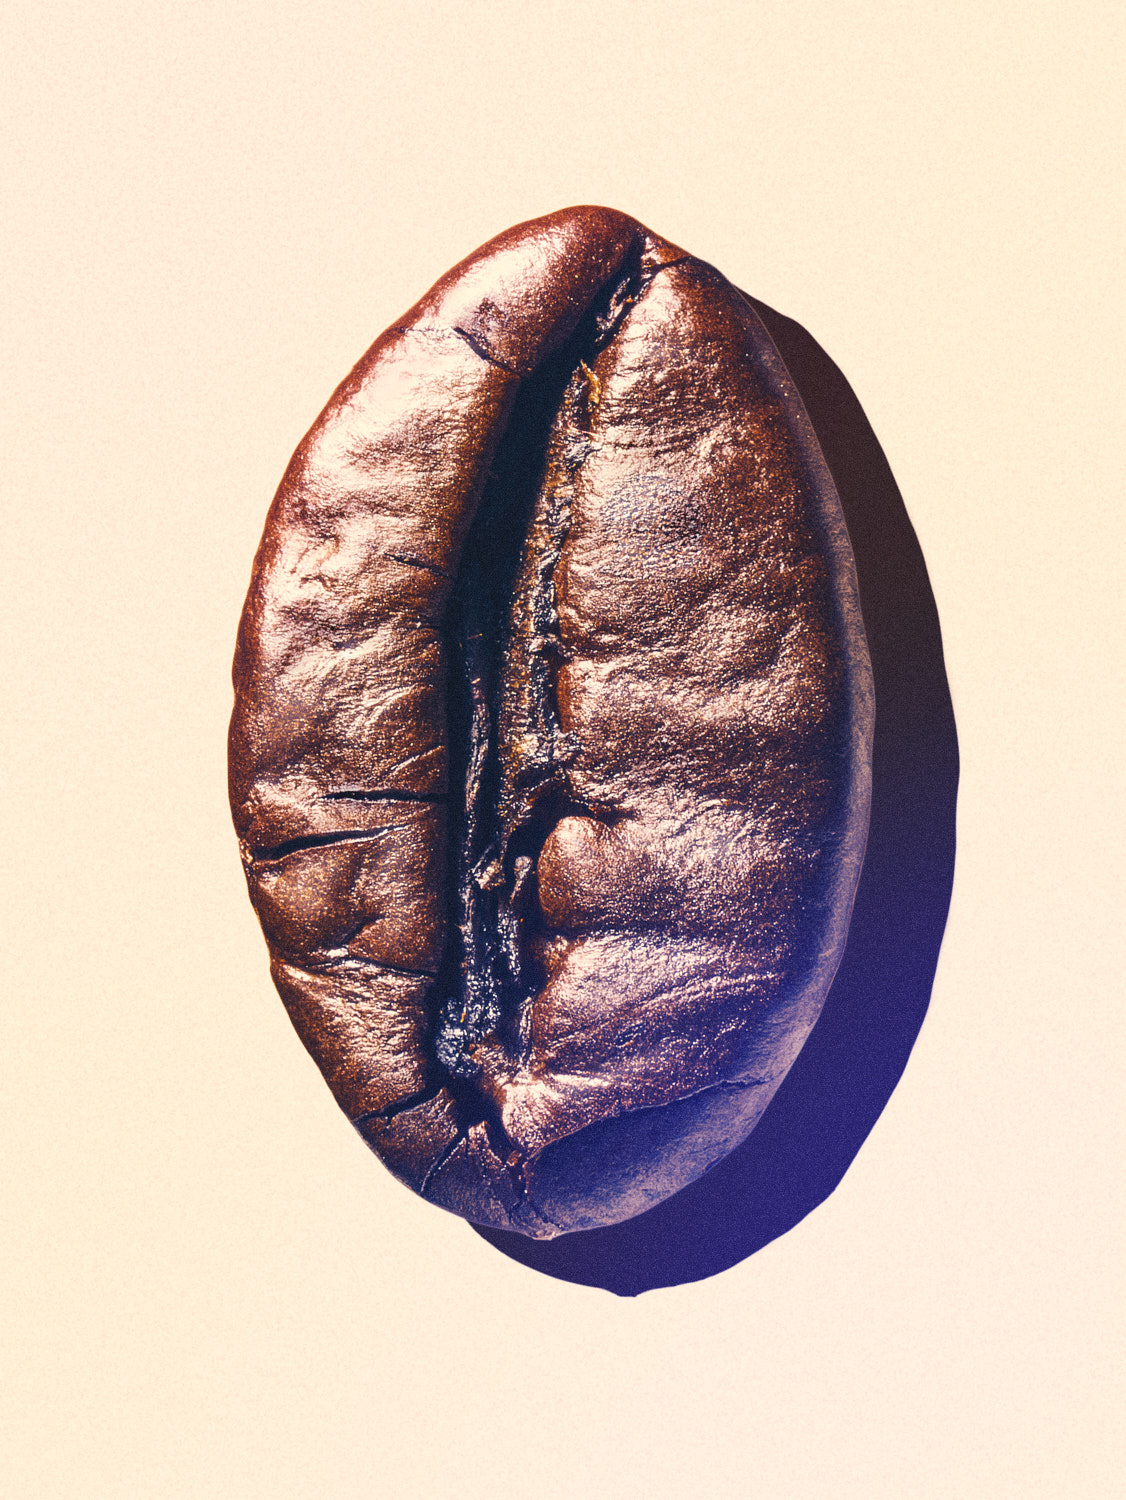 Coffee Bean Photographed In A Minimalist Way  - London Food & Drinks Photographer